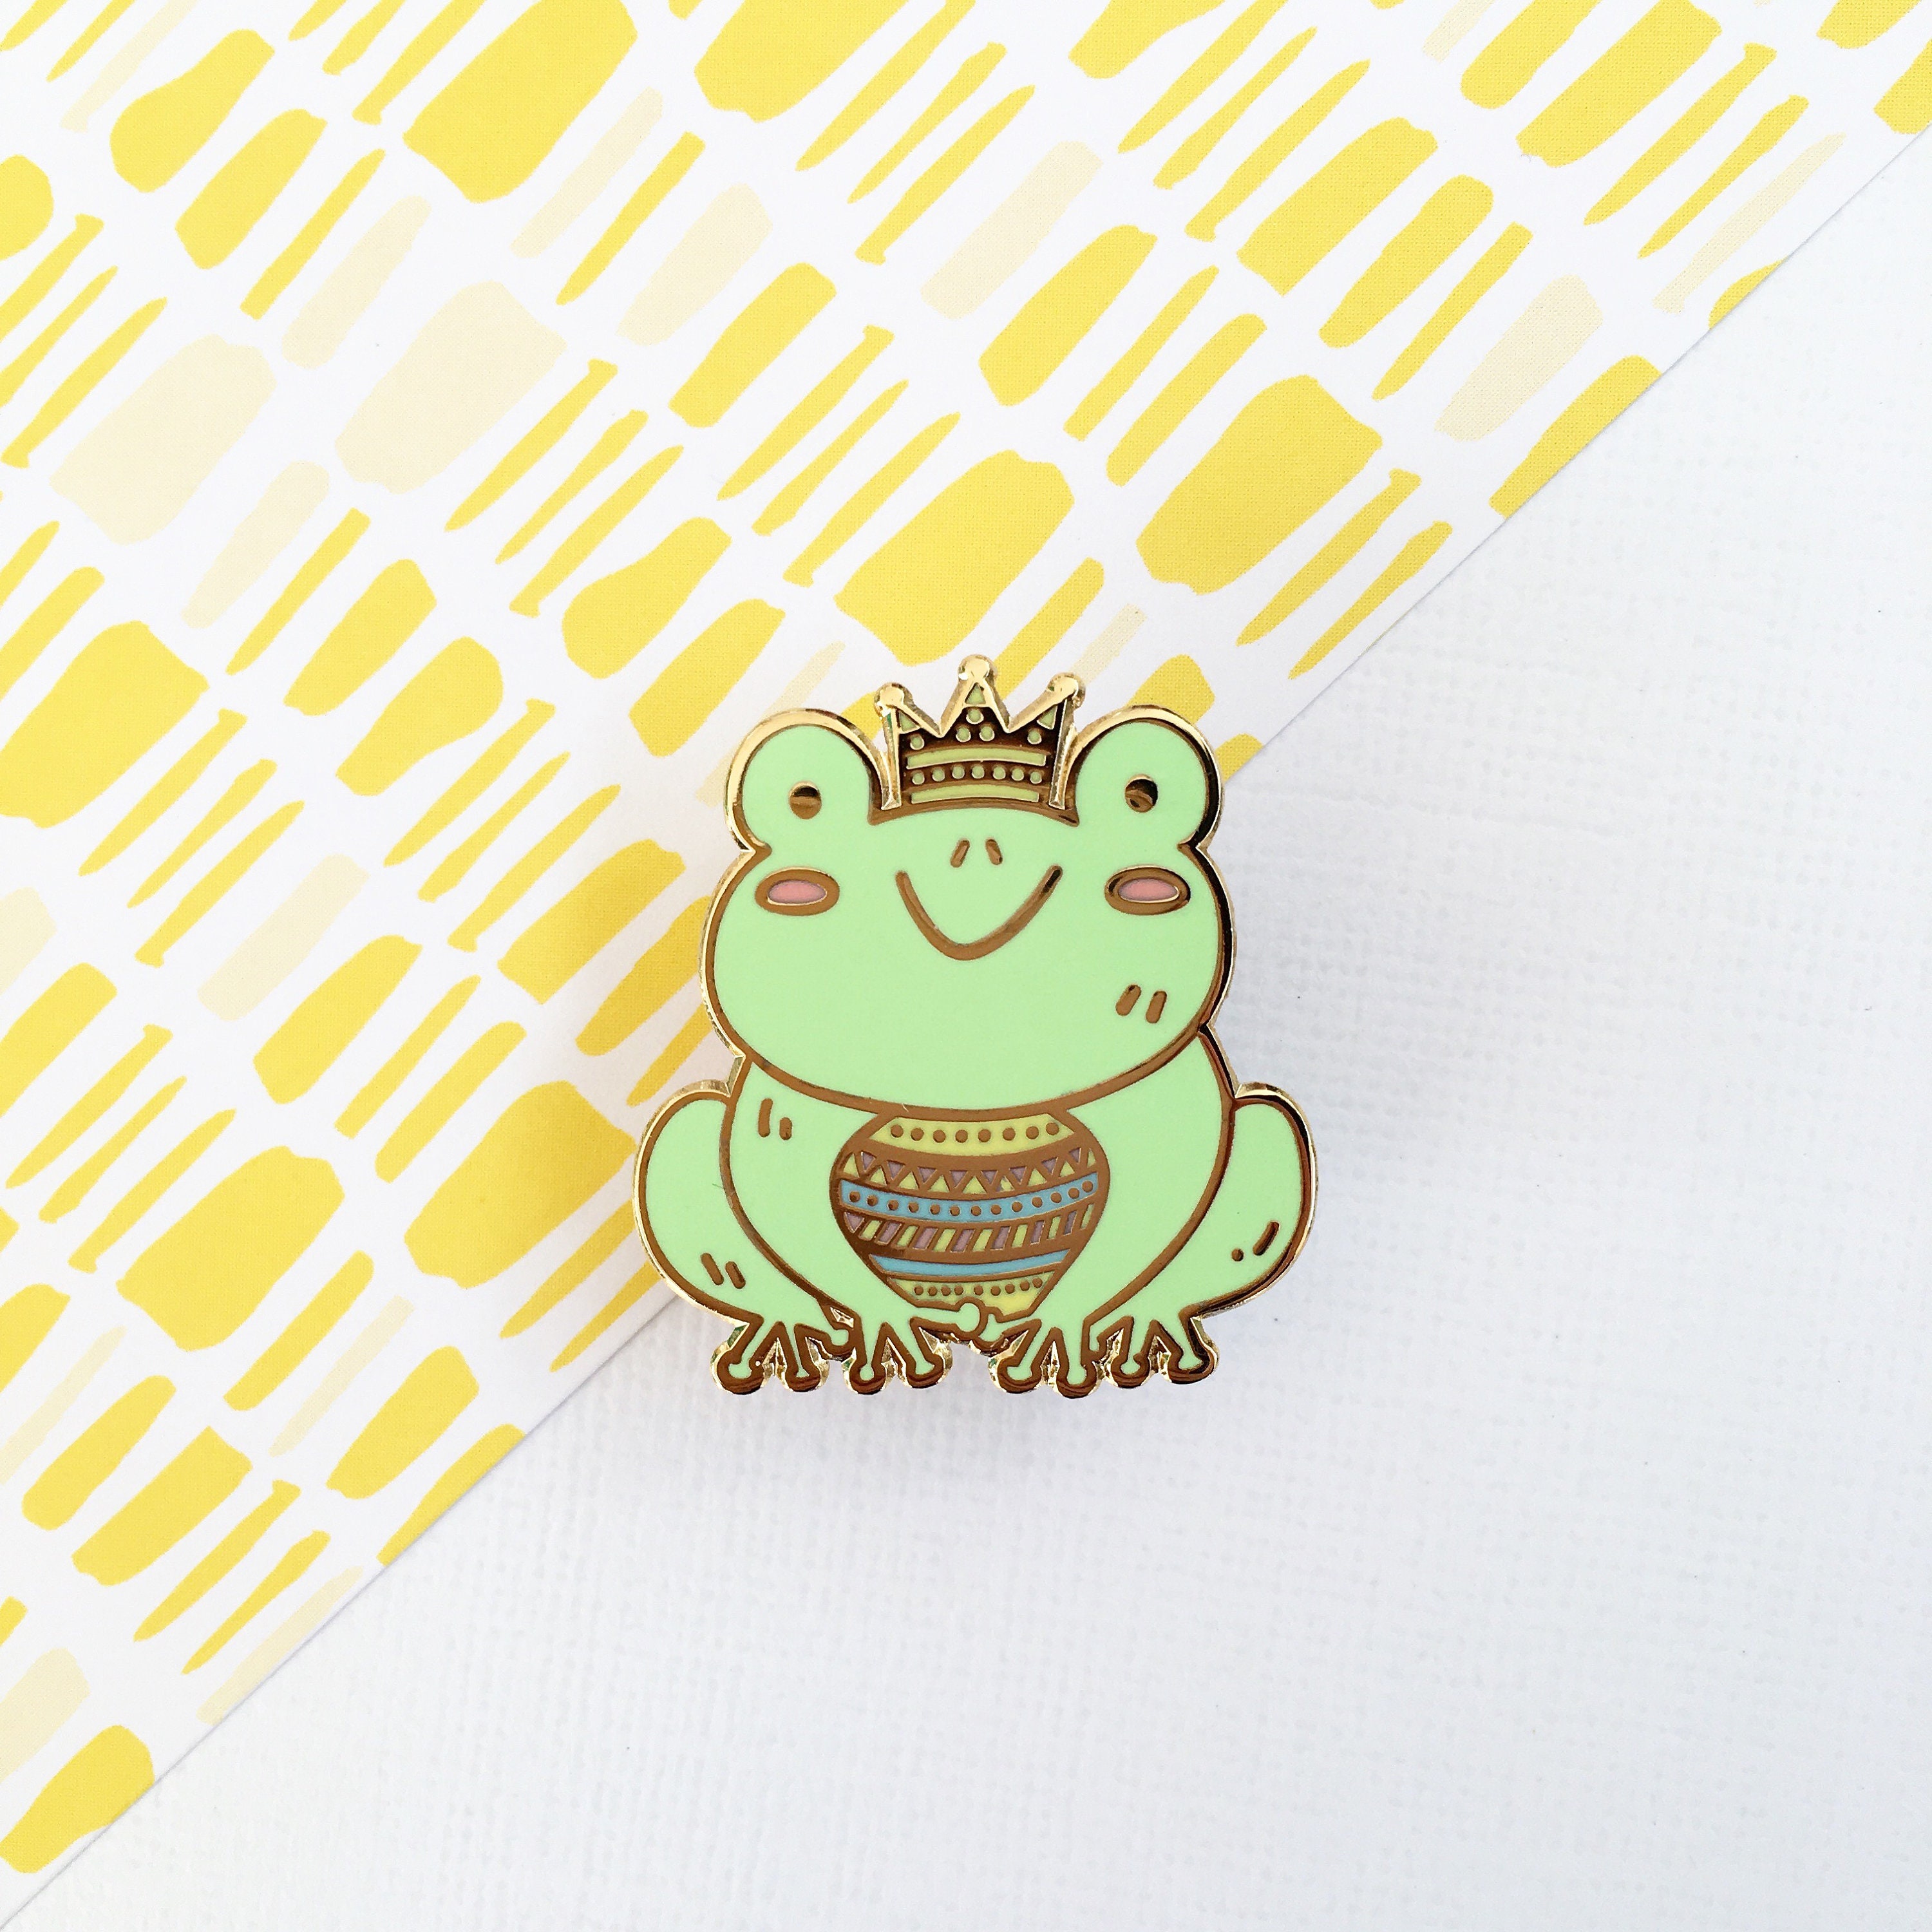 Cutie Frog Hard Enamel Pin | Kawaii Cute Frog with Flowers Lapel Pin